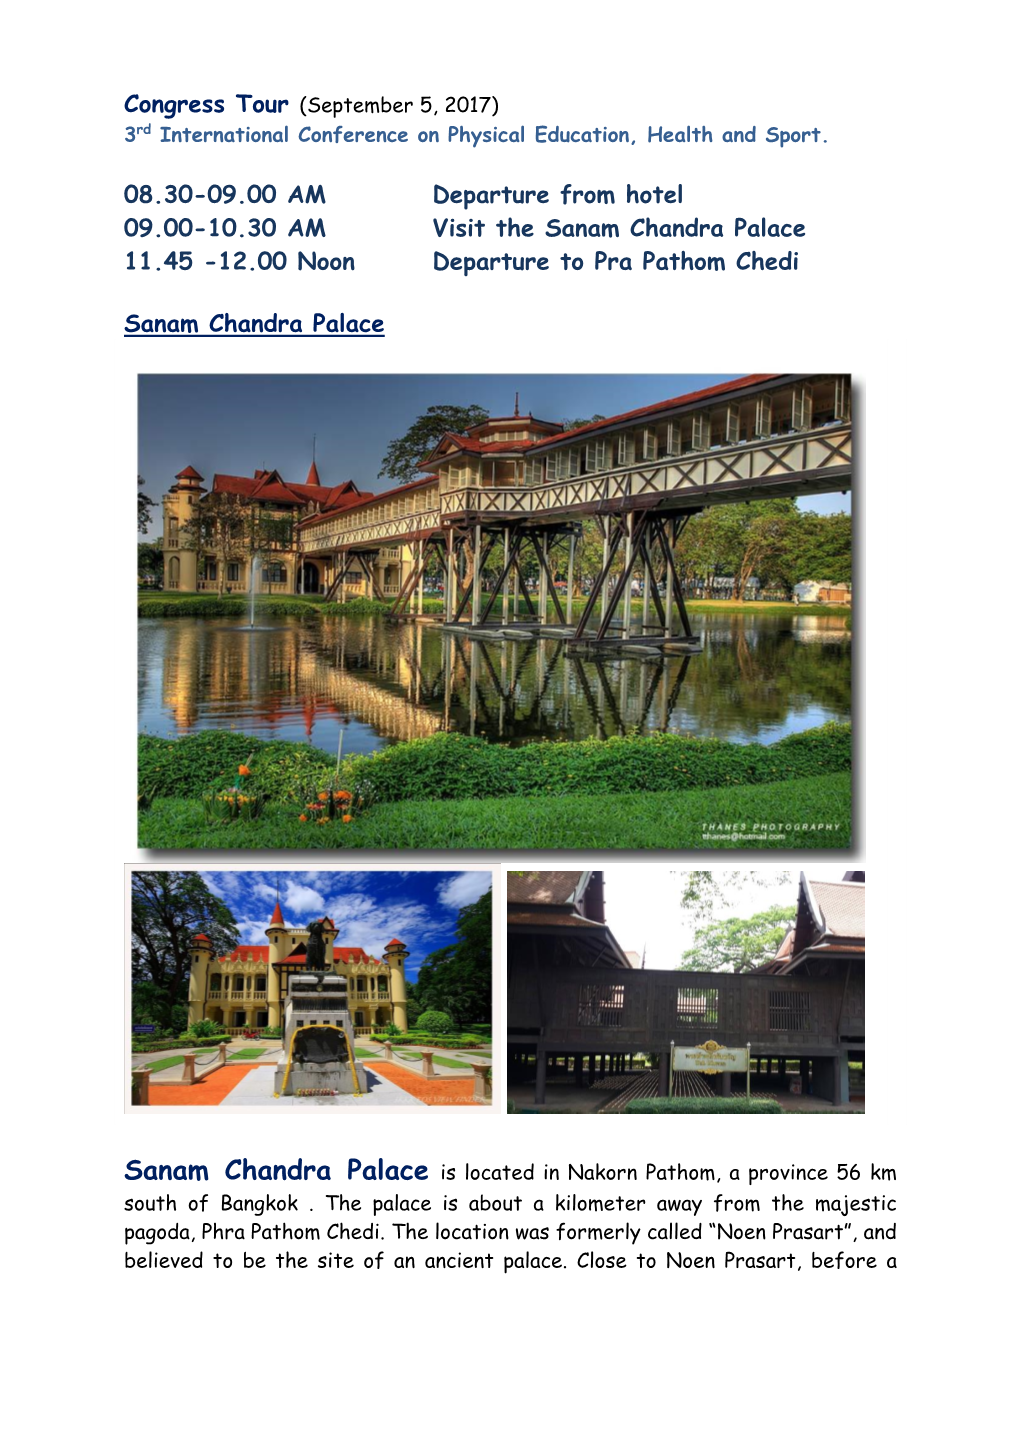 Sanam Chandra Palace 11.45 -12.00 Noon Departure to Pra Pathom Chedi